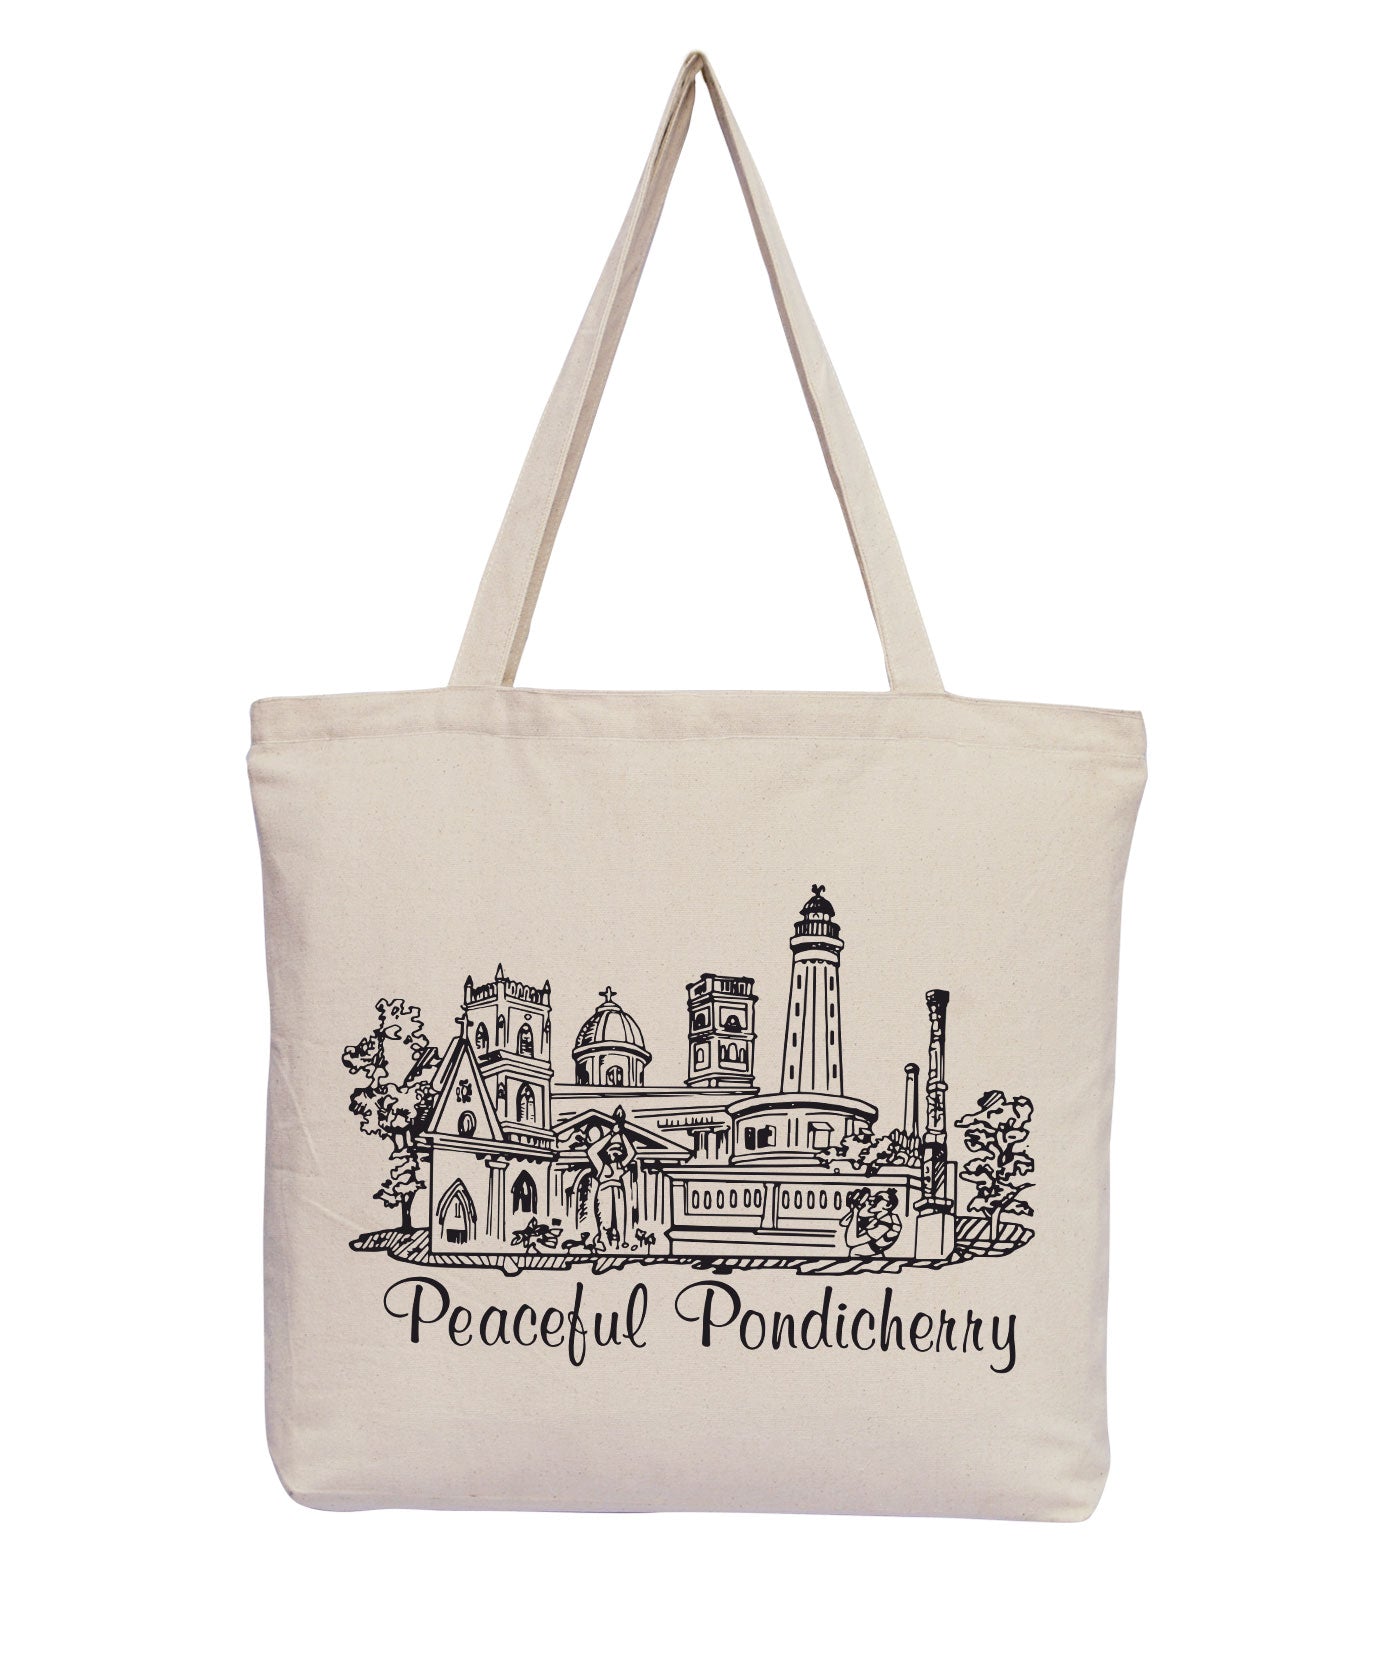 Peaceful Pondicherry - Natural Tote Bag